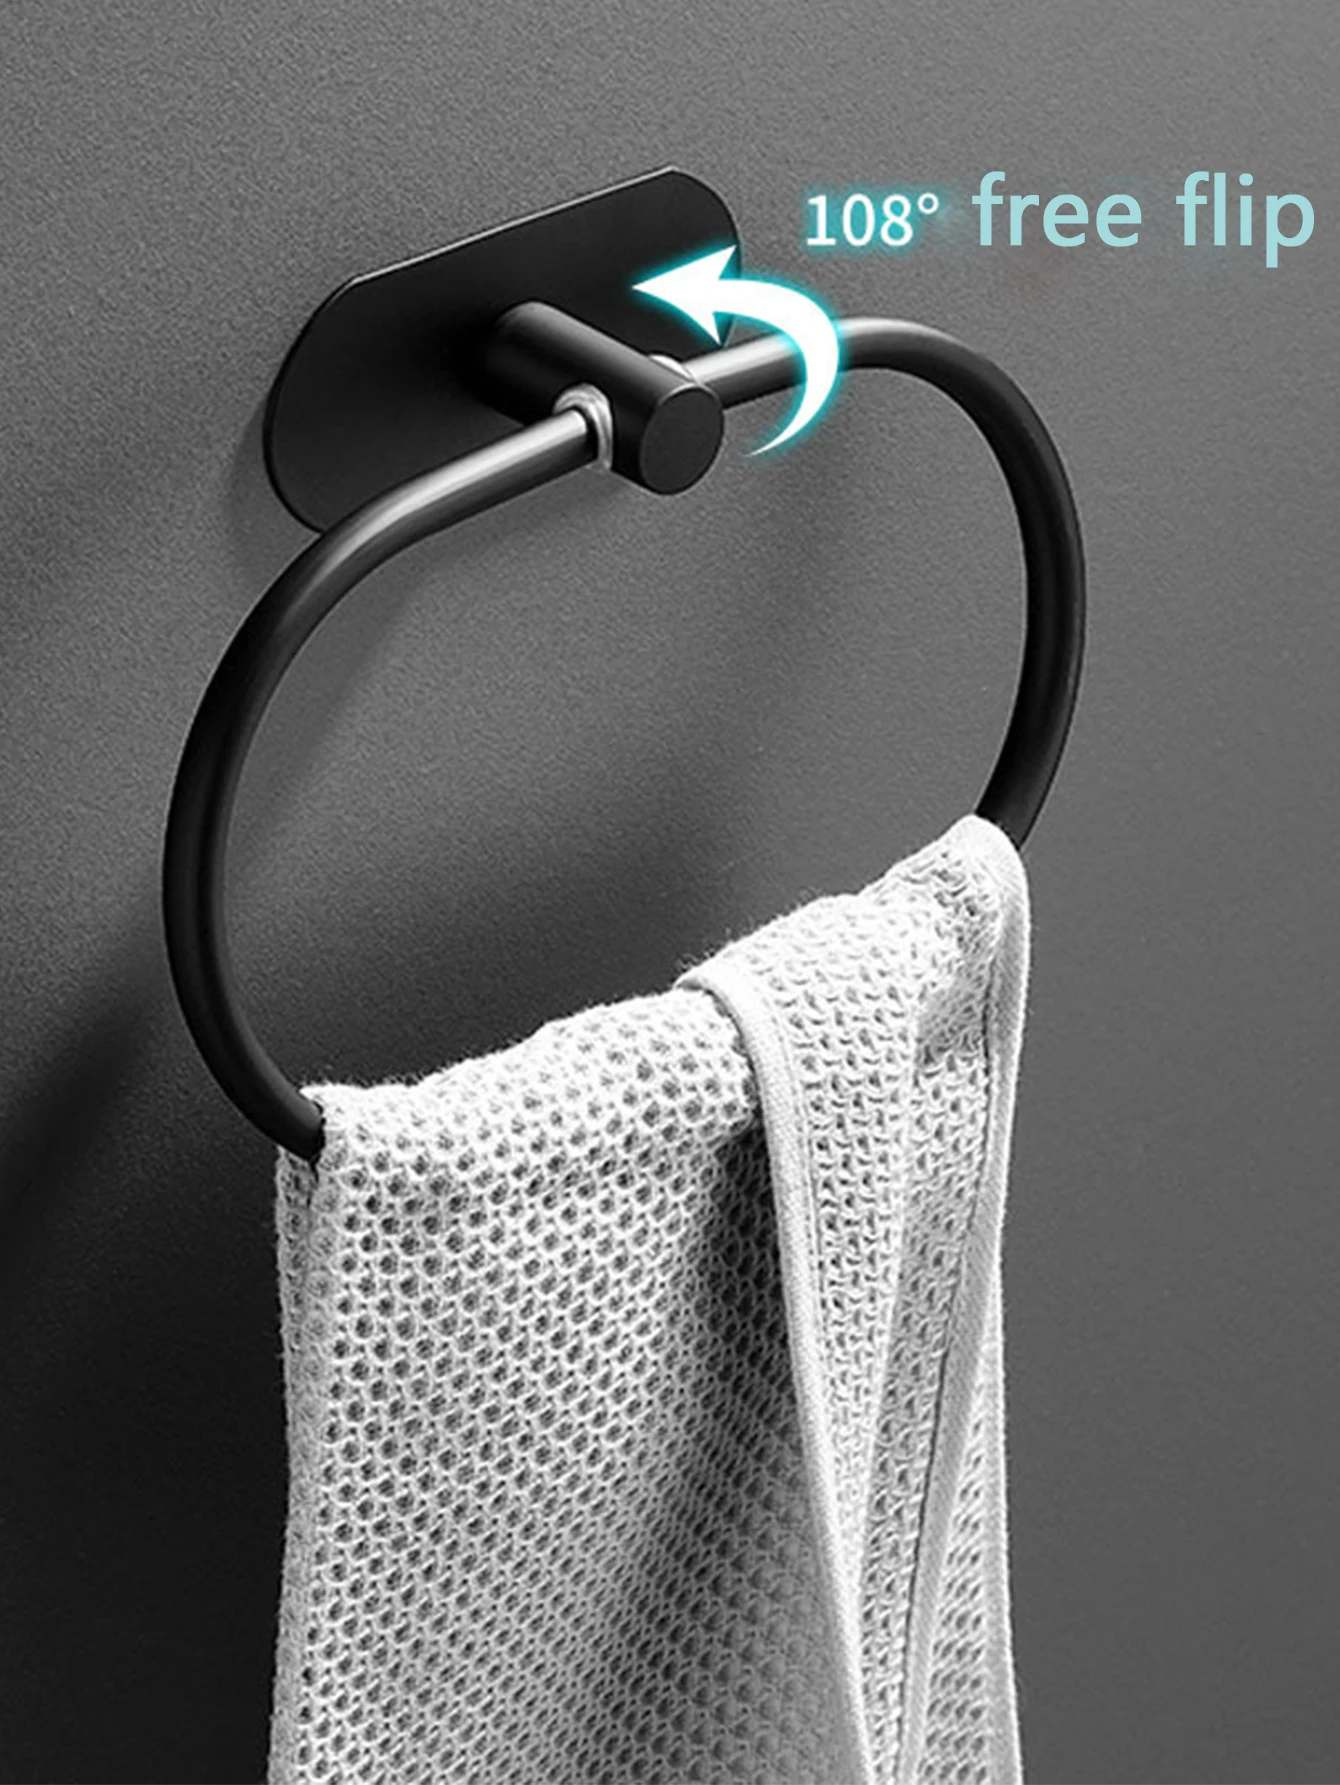 Sa63725239fbe45c58a69da2cf1efe521h Adhesive Paper Towel Holder For Kitchen Napkin Rack Toilet Paper Holder Tissue Dispenser Cabinet Storage Bathroom Accessories